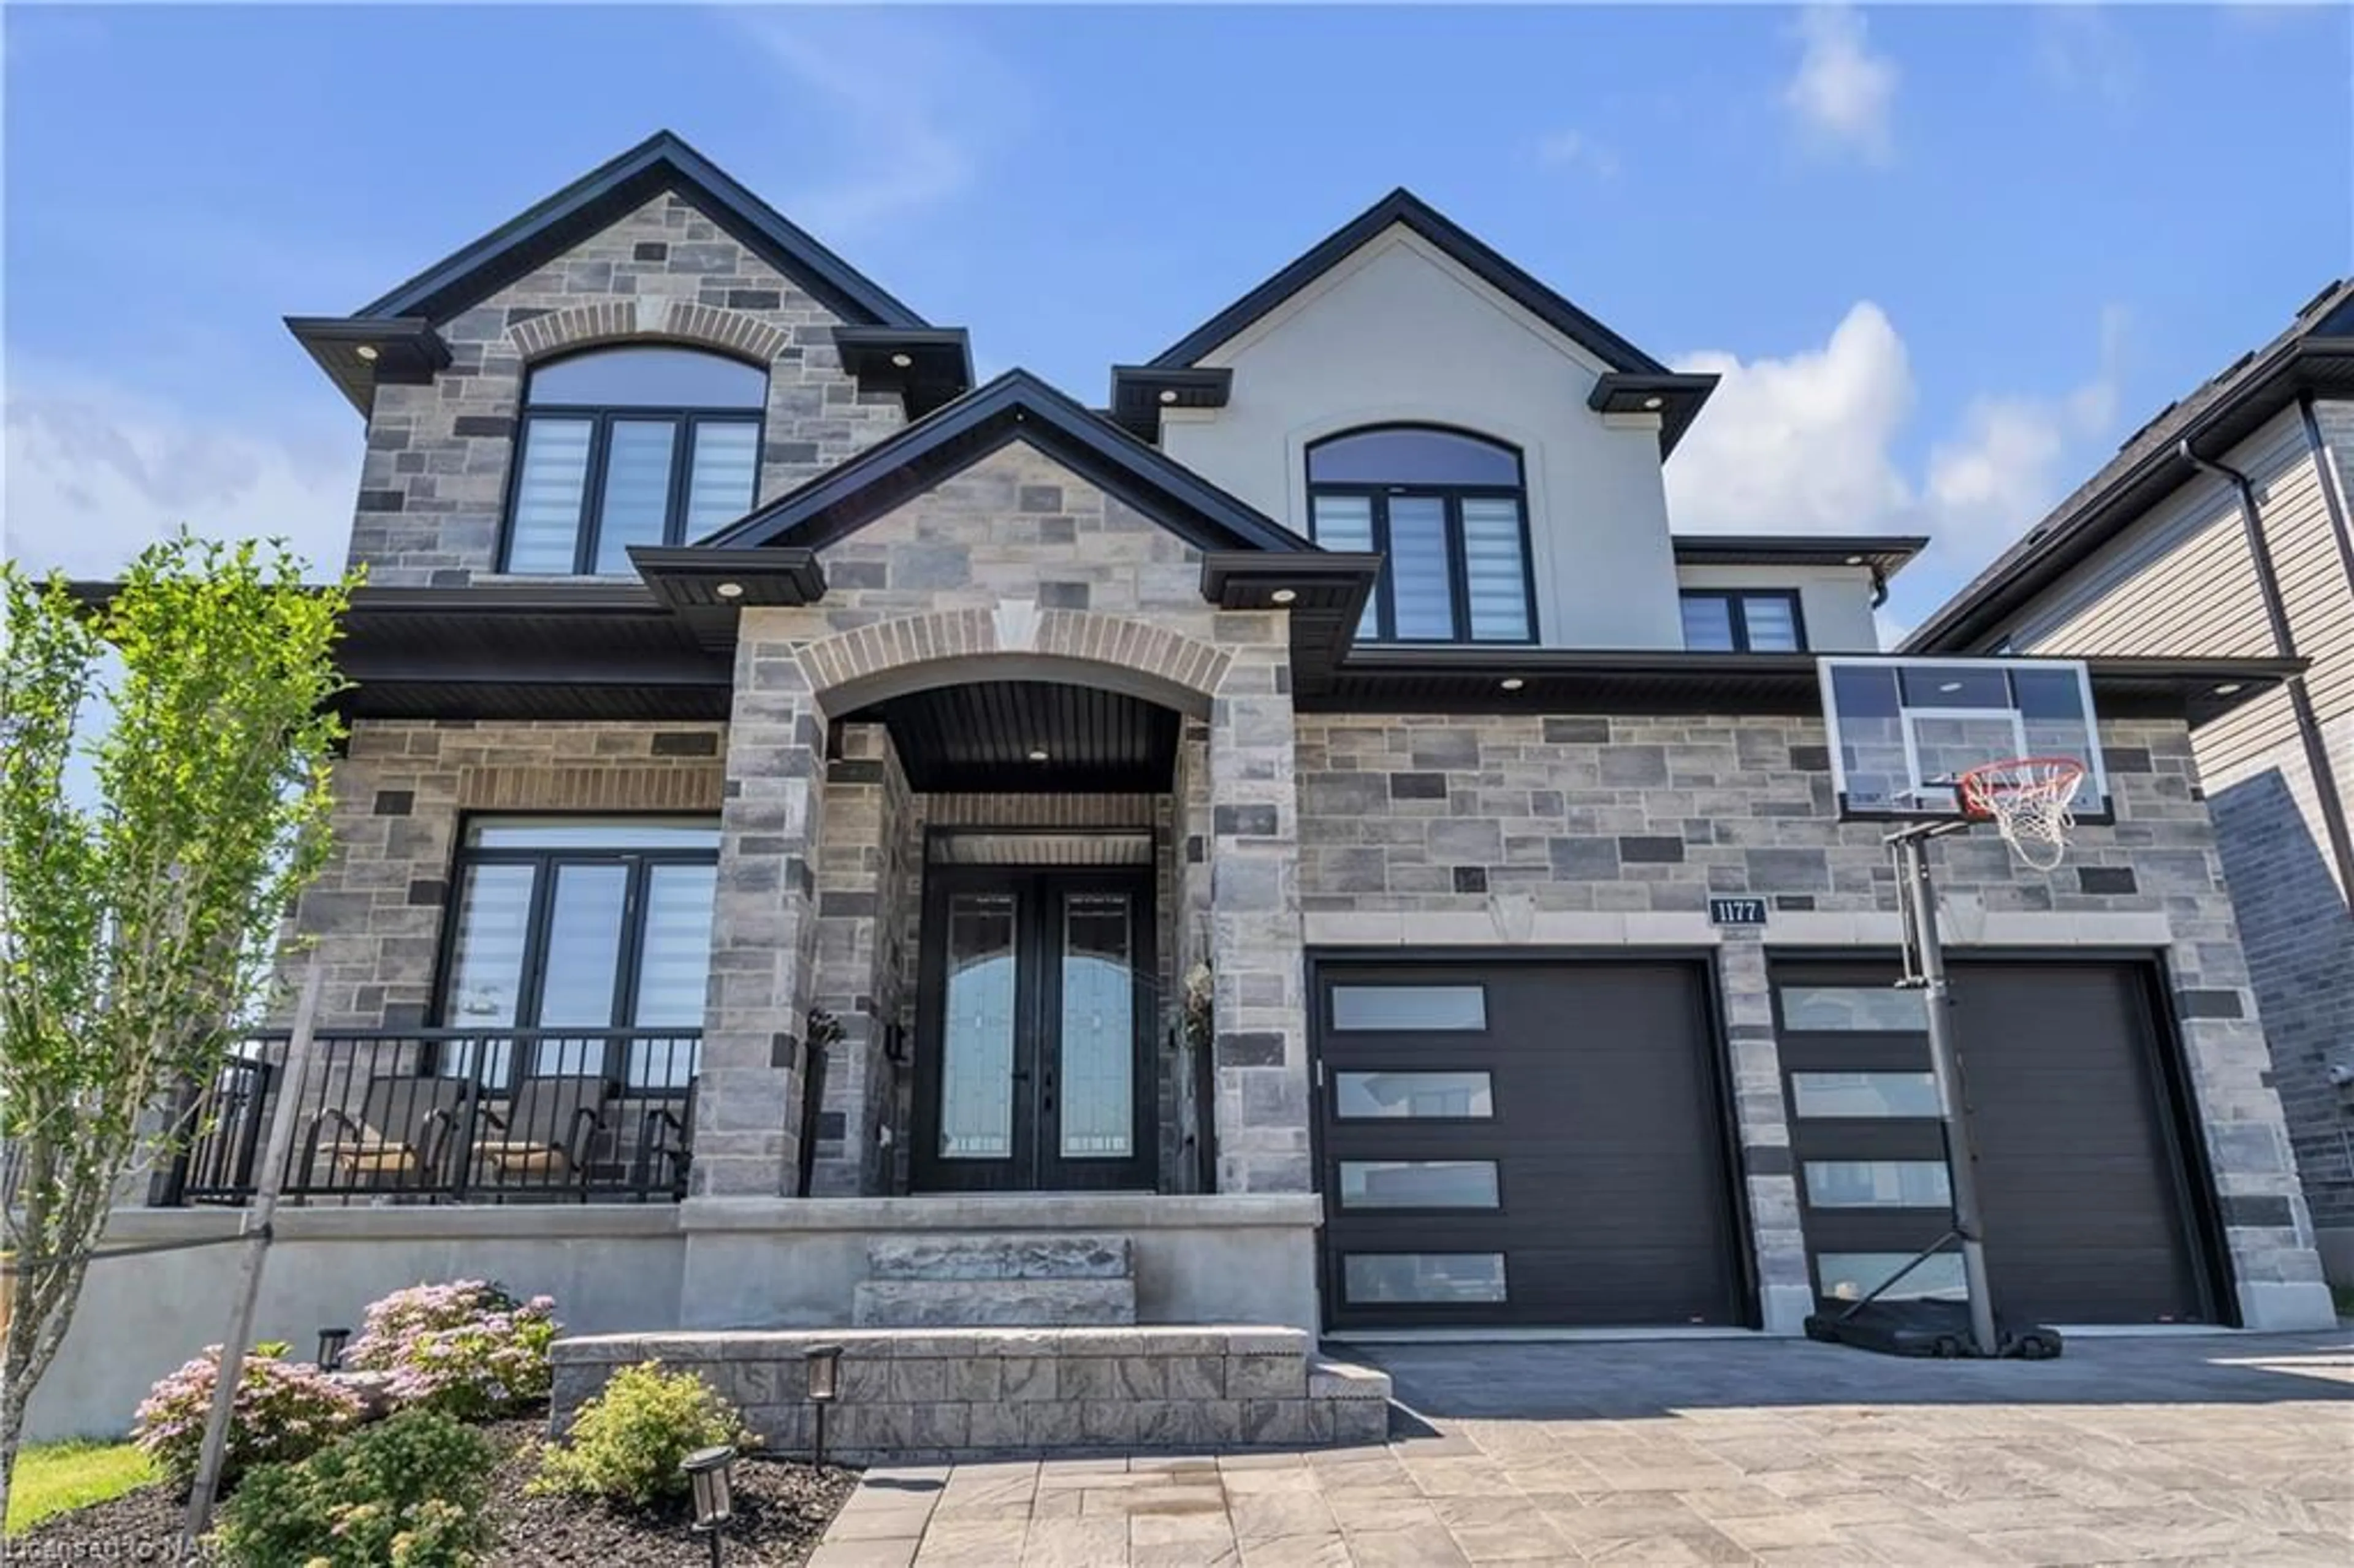 Home with brick exterior material for 1177 Meadowlark Ridge, London Ontario N6M 0H3